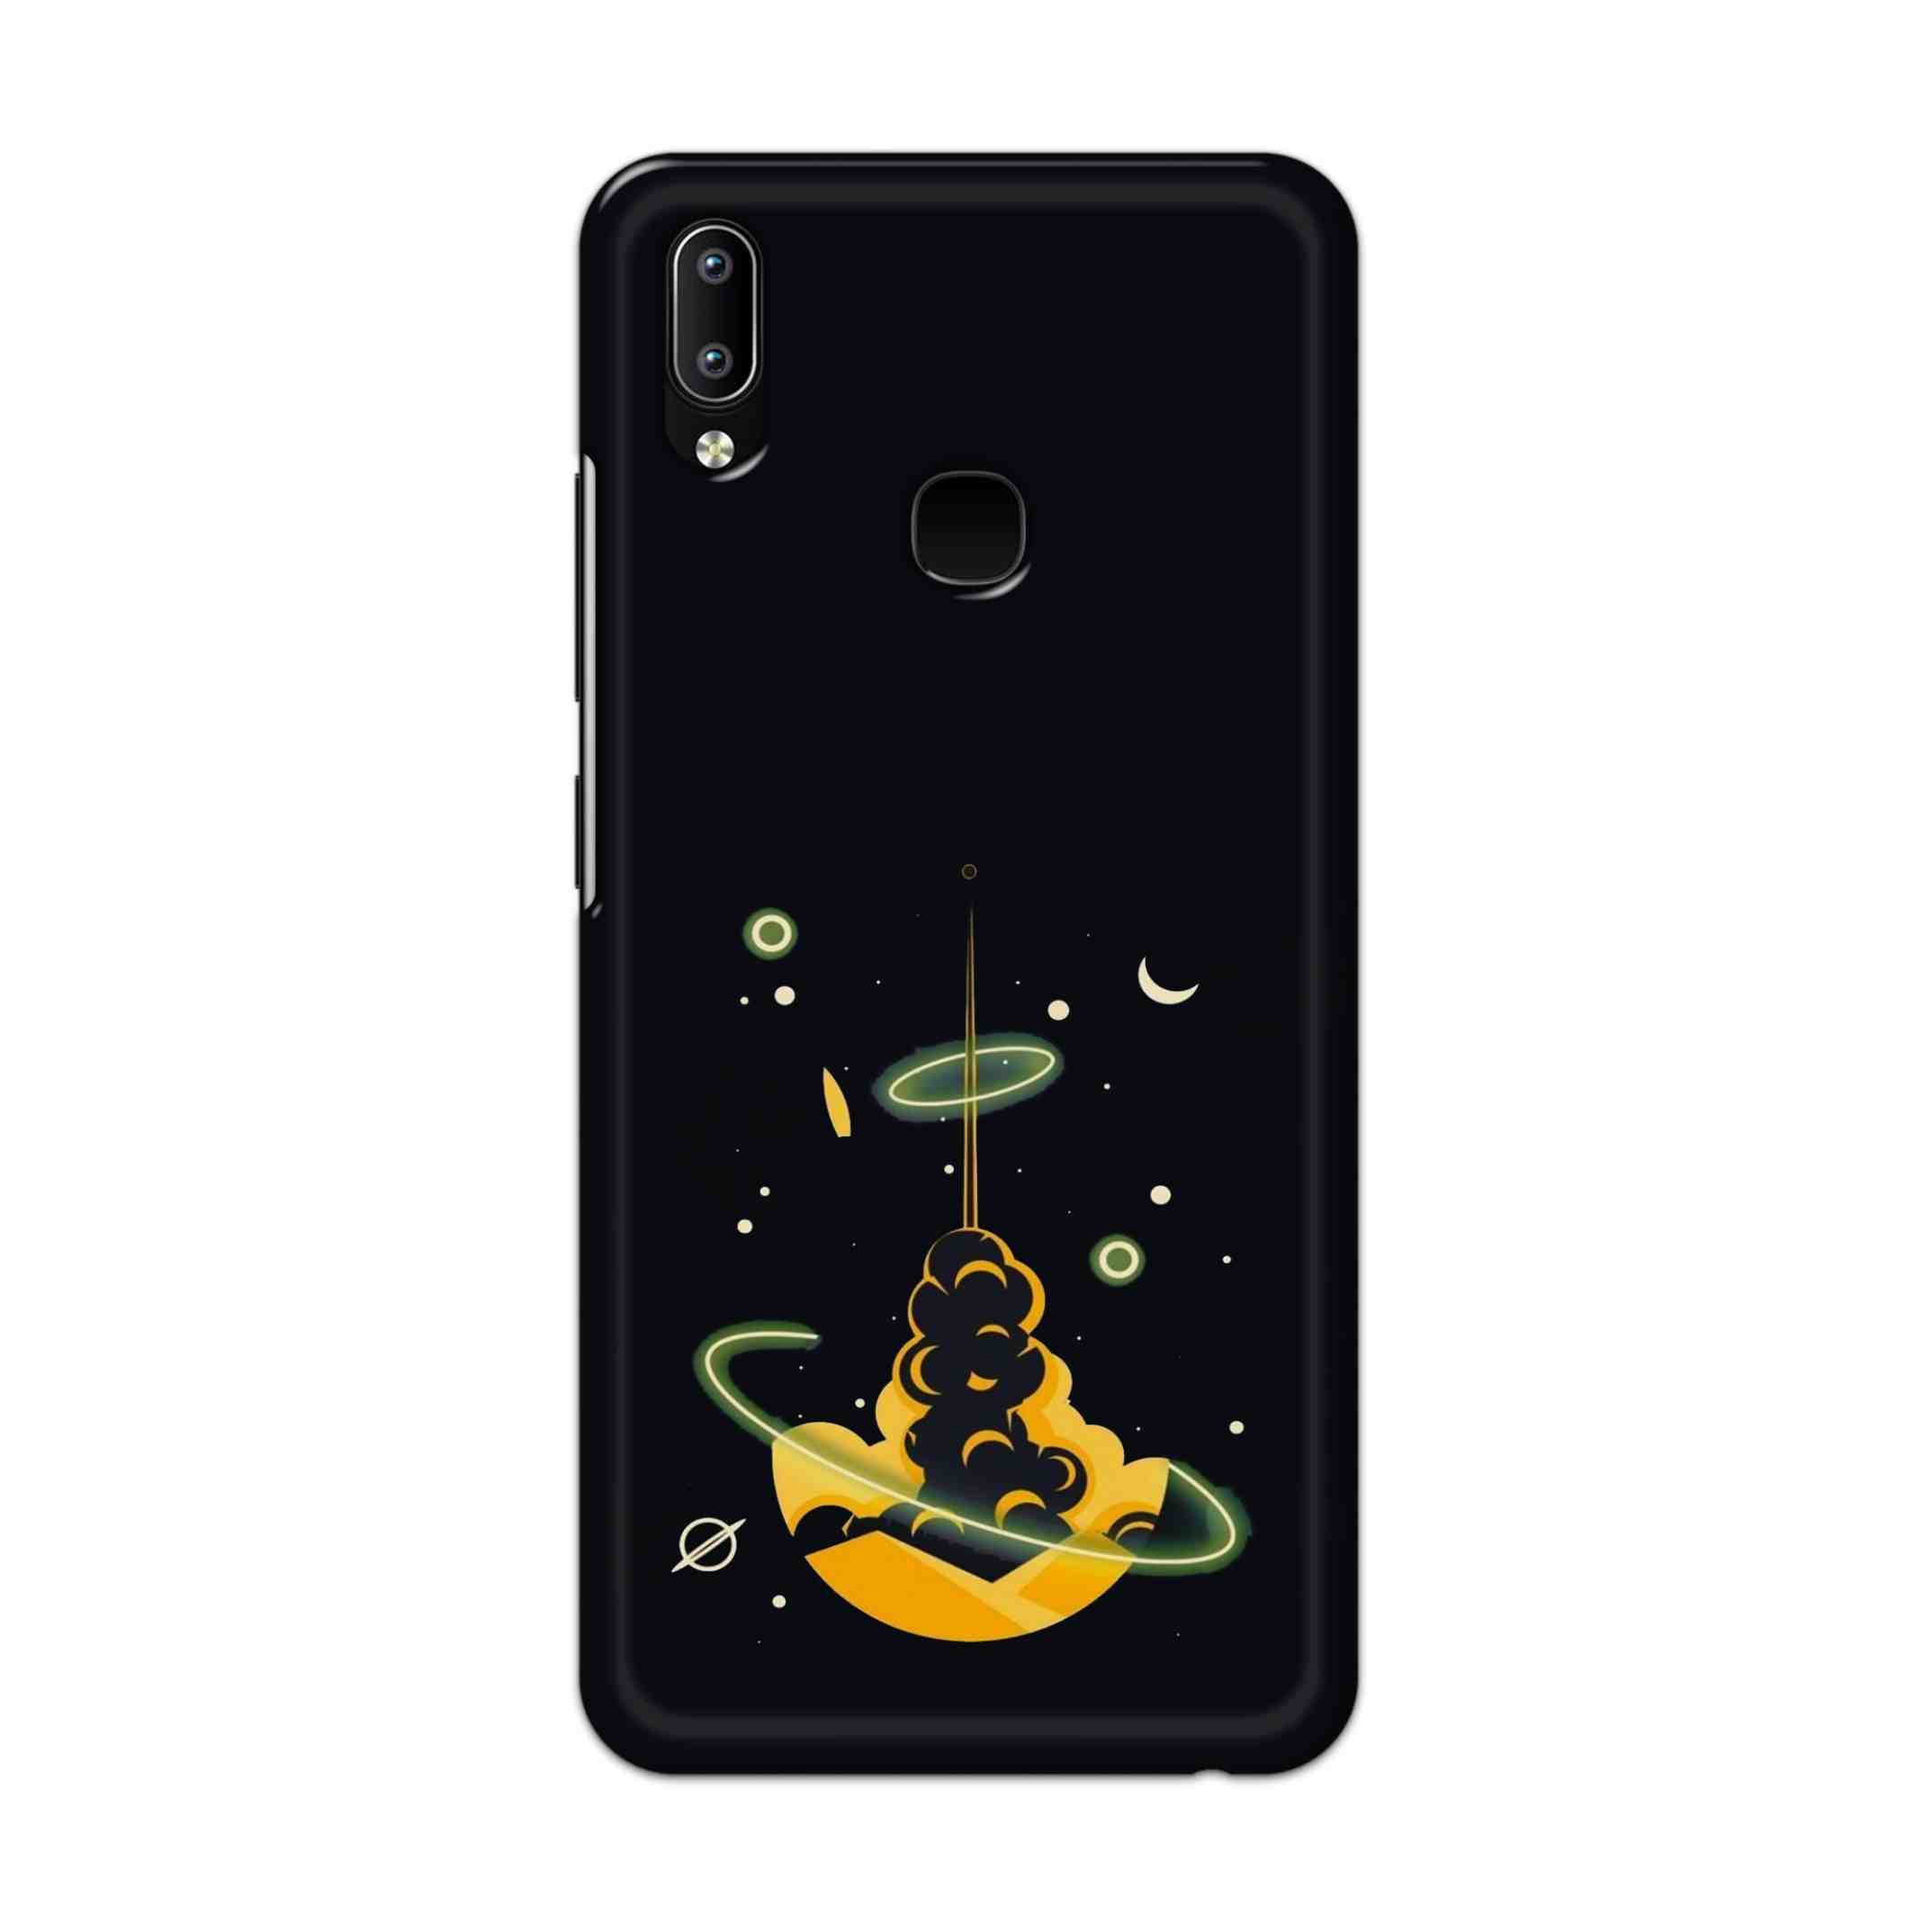 Buy Moon Hard Back Mobile Phone Case Cover For Vivo Y95 / Y93 / Y91 Online